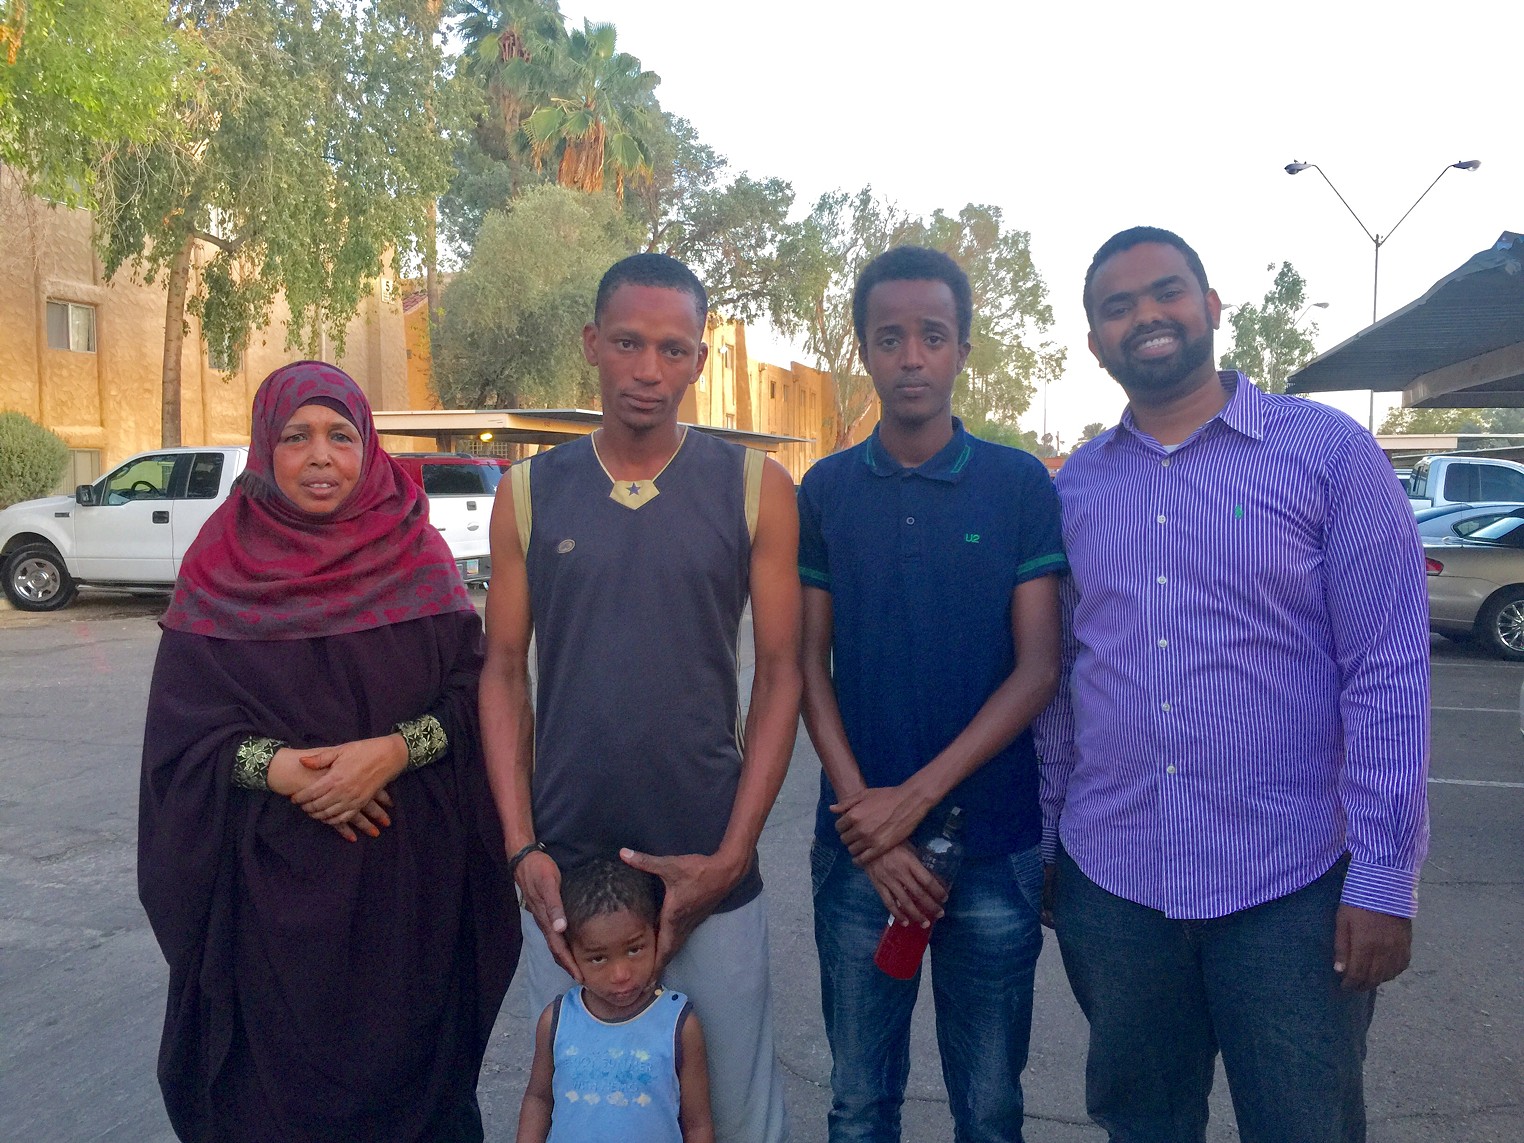 largest somali population in us